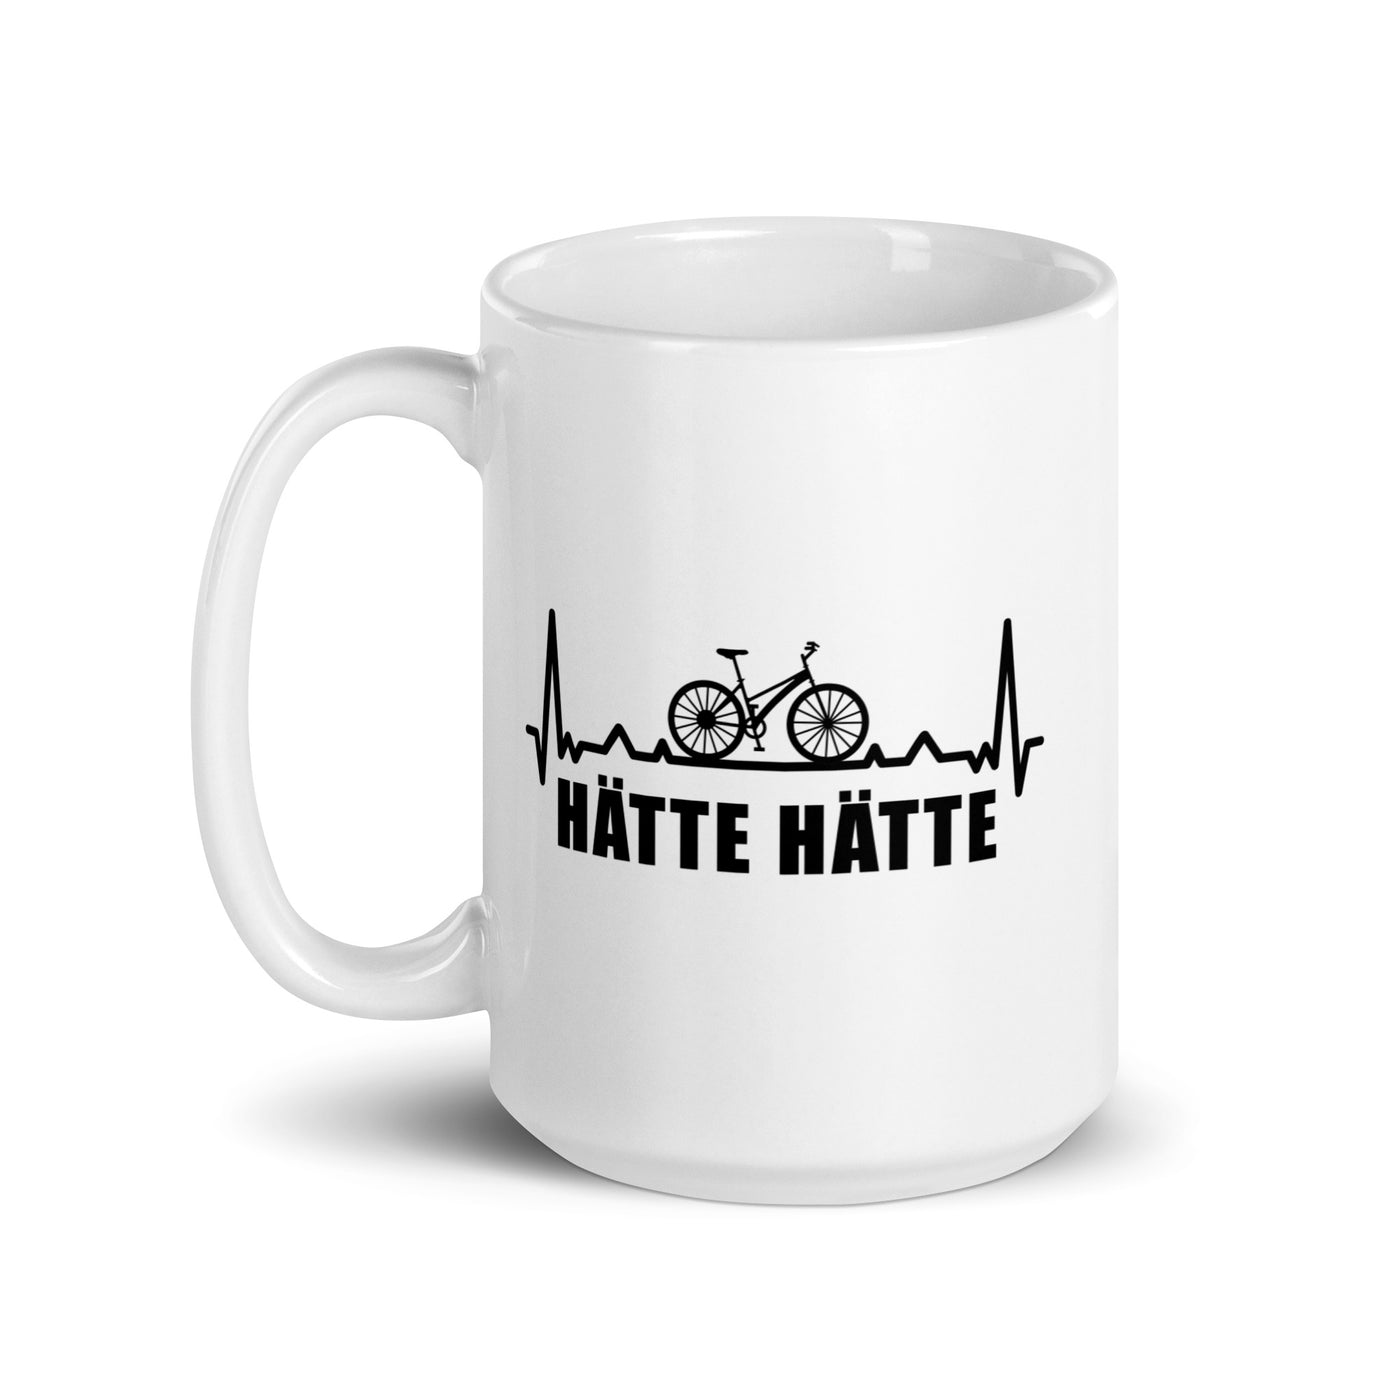 Hatte Hatte 1 - Tasse fahrrad